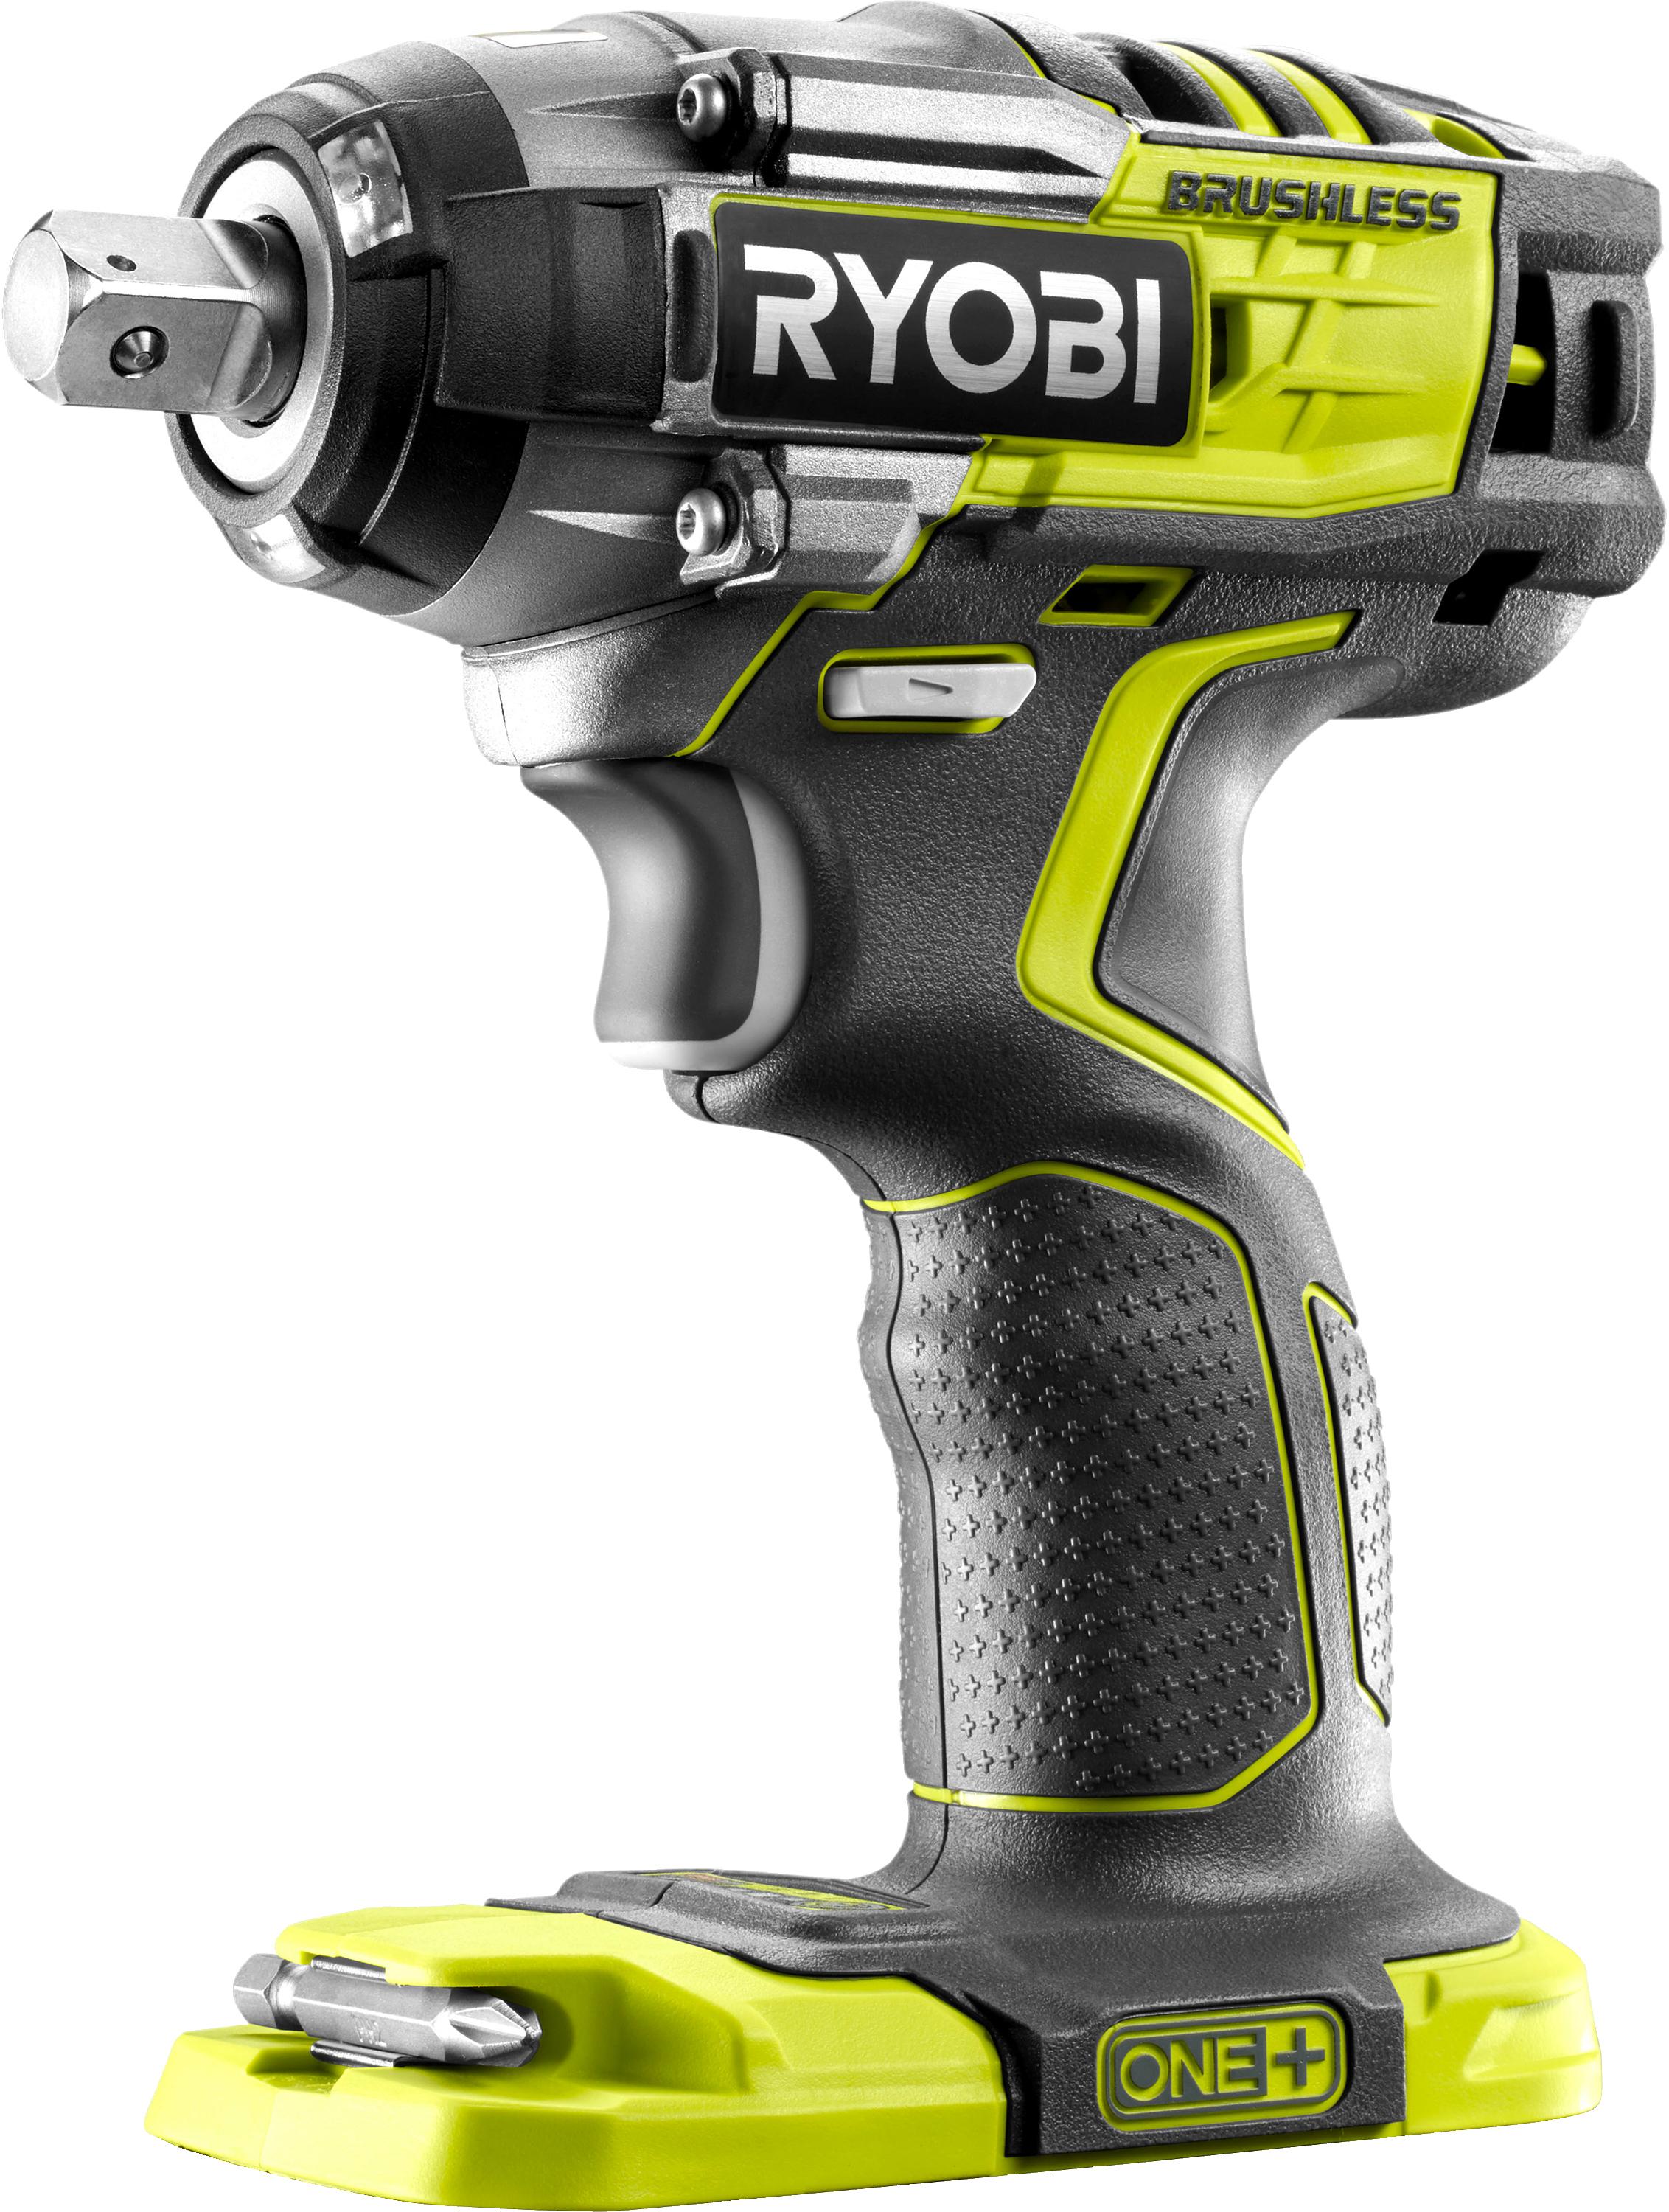 Ryobi R18Iw7-0 One+ Brushless Impact Wrench